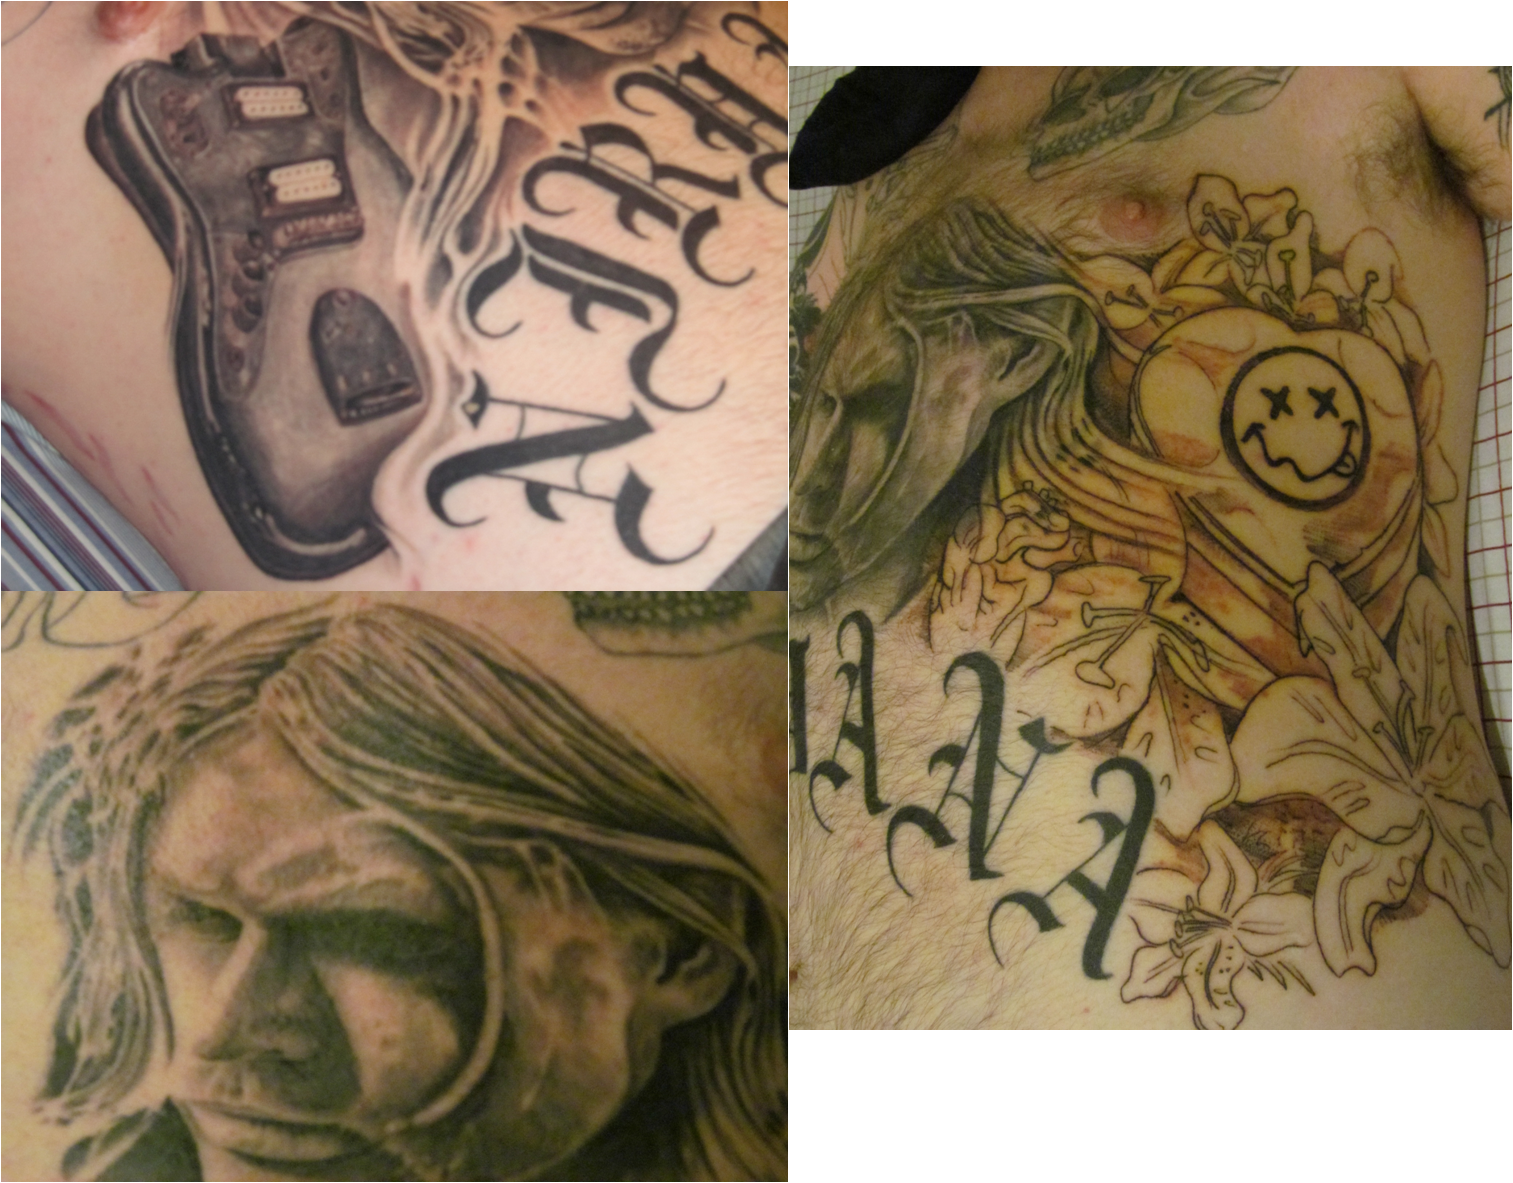 60 Nirvana Tattoo Designs For Men - Rock Band Ink Ideas